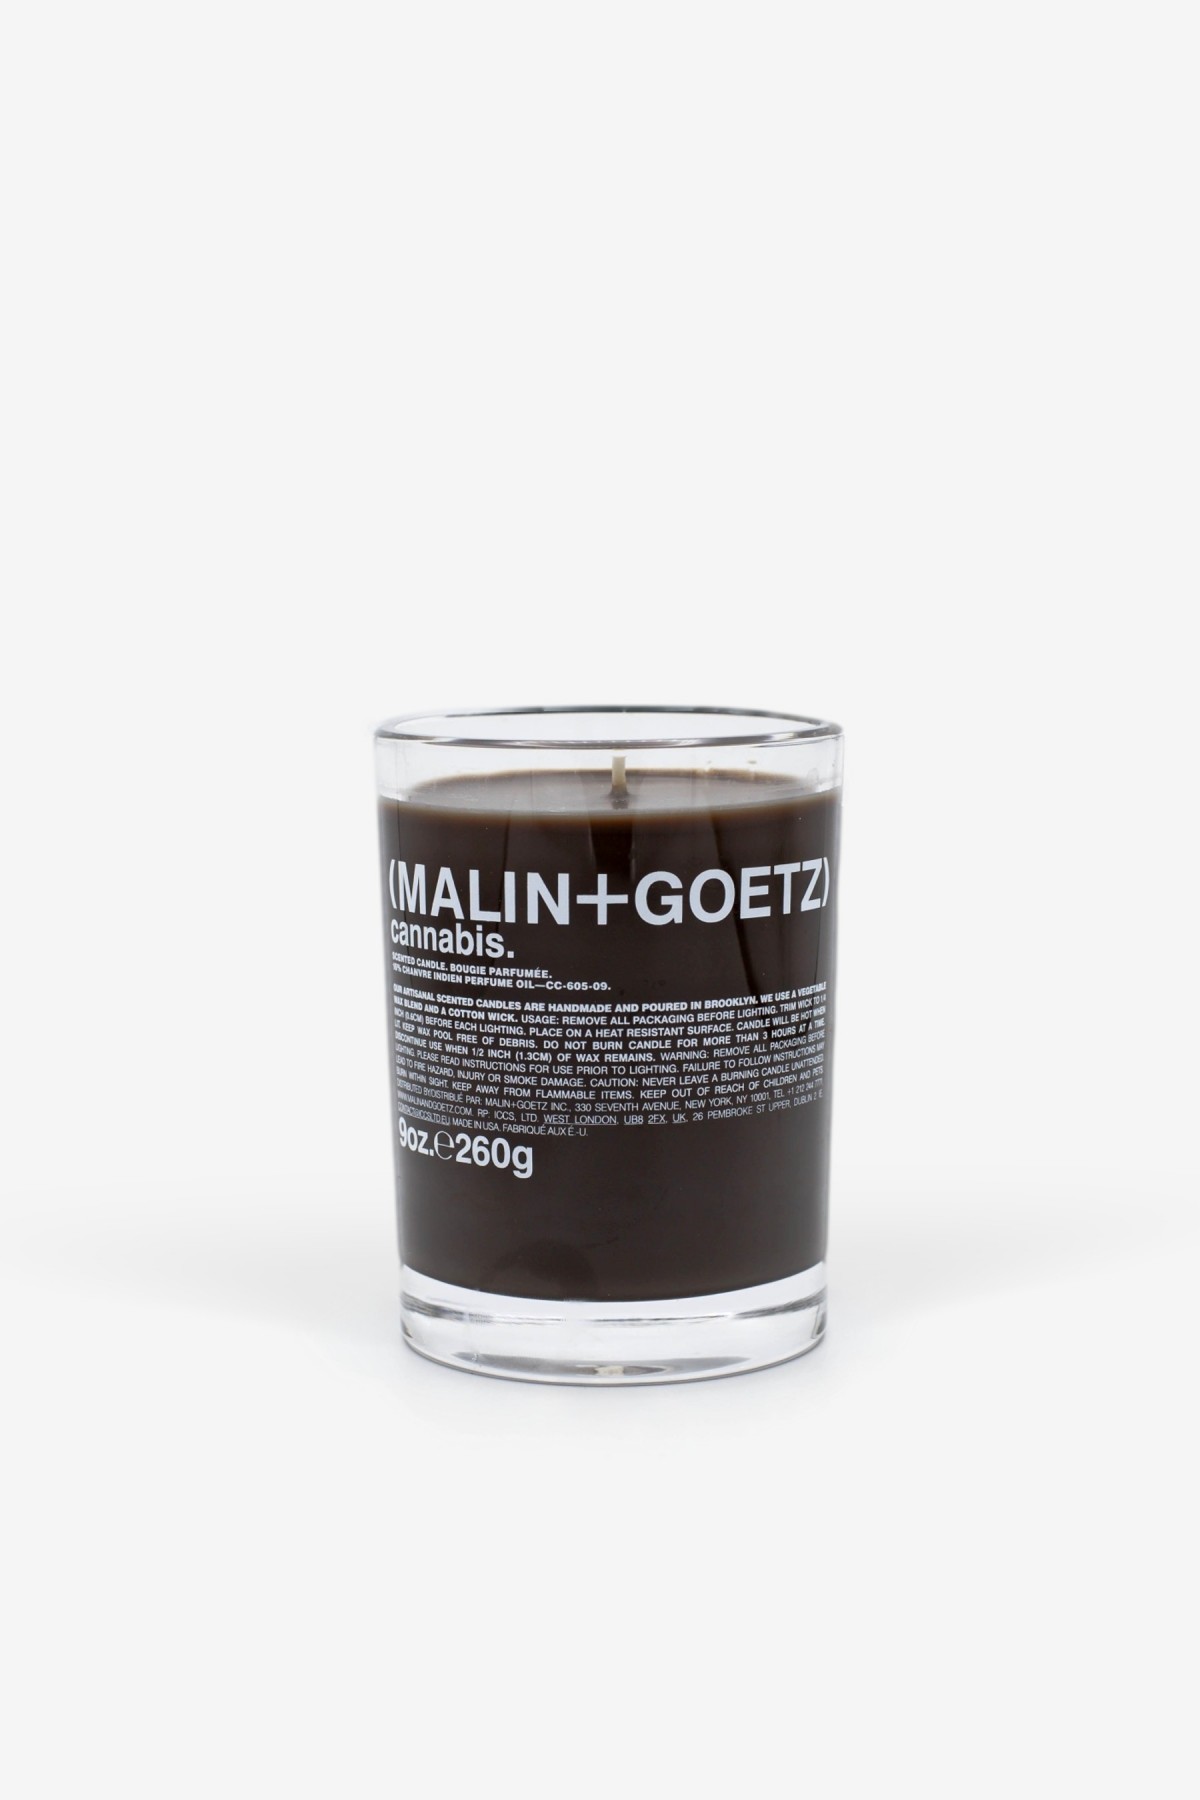 Malin+Goetz Cannabis Candle 260g in 